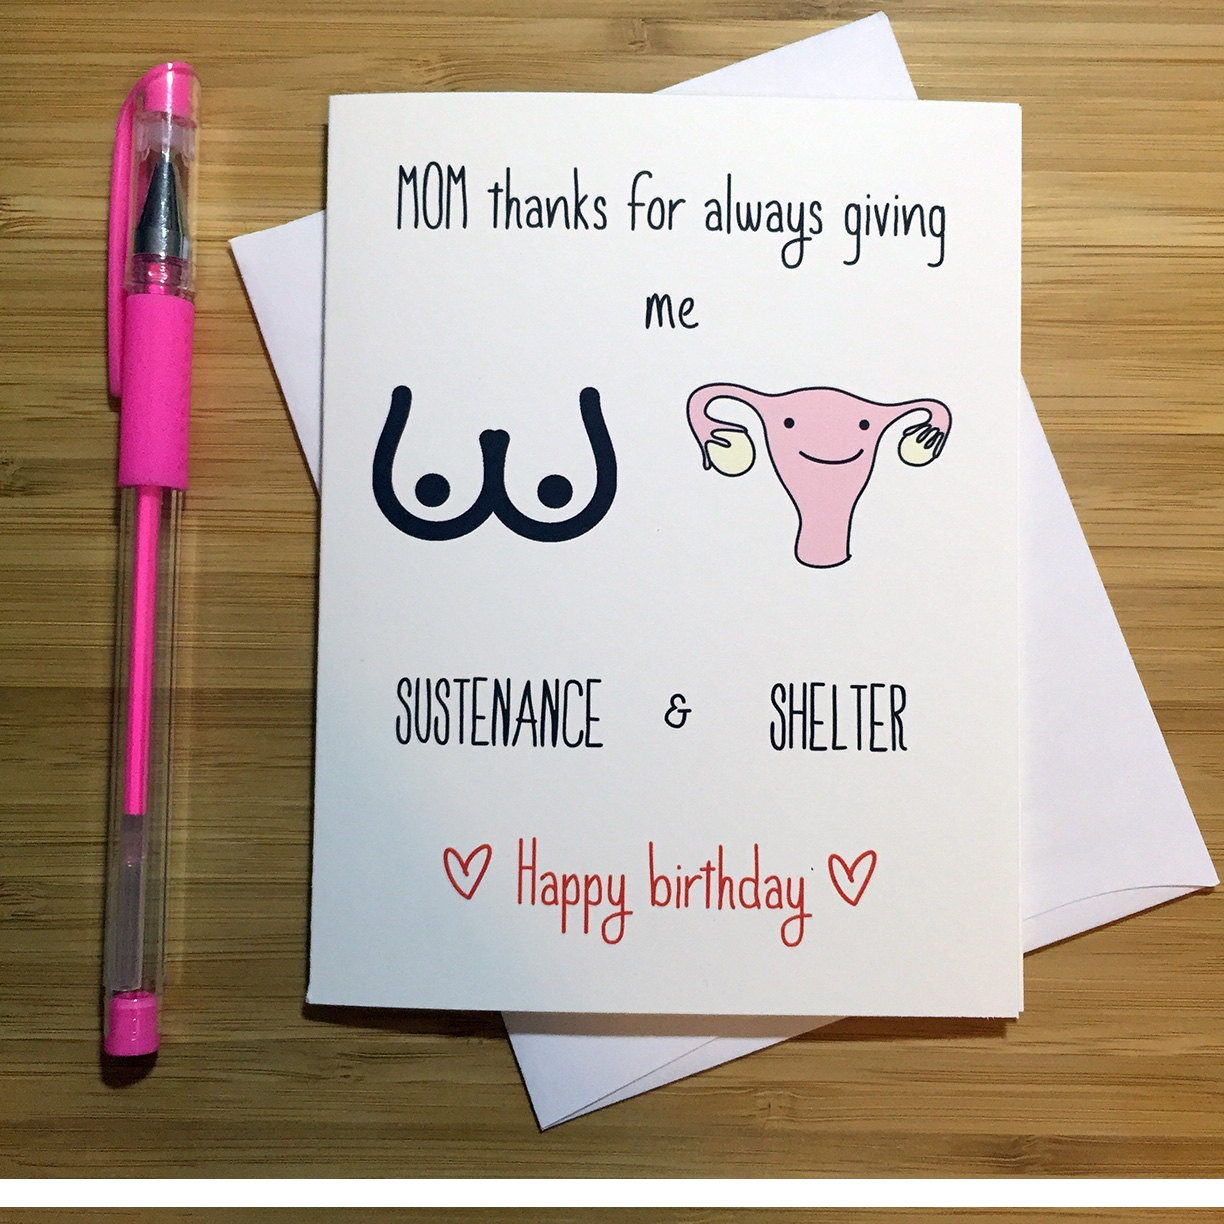 Happy Birthday Card Ideas For Friends E Birthday Cards For Friends Birthday Invitation Examples